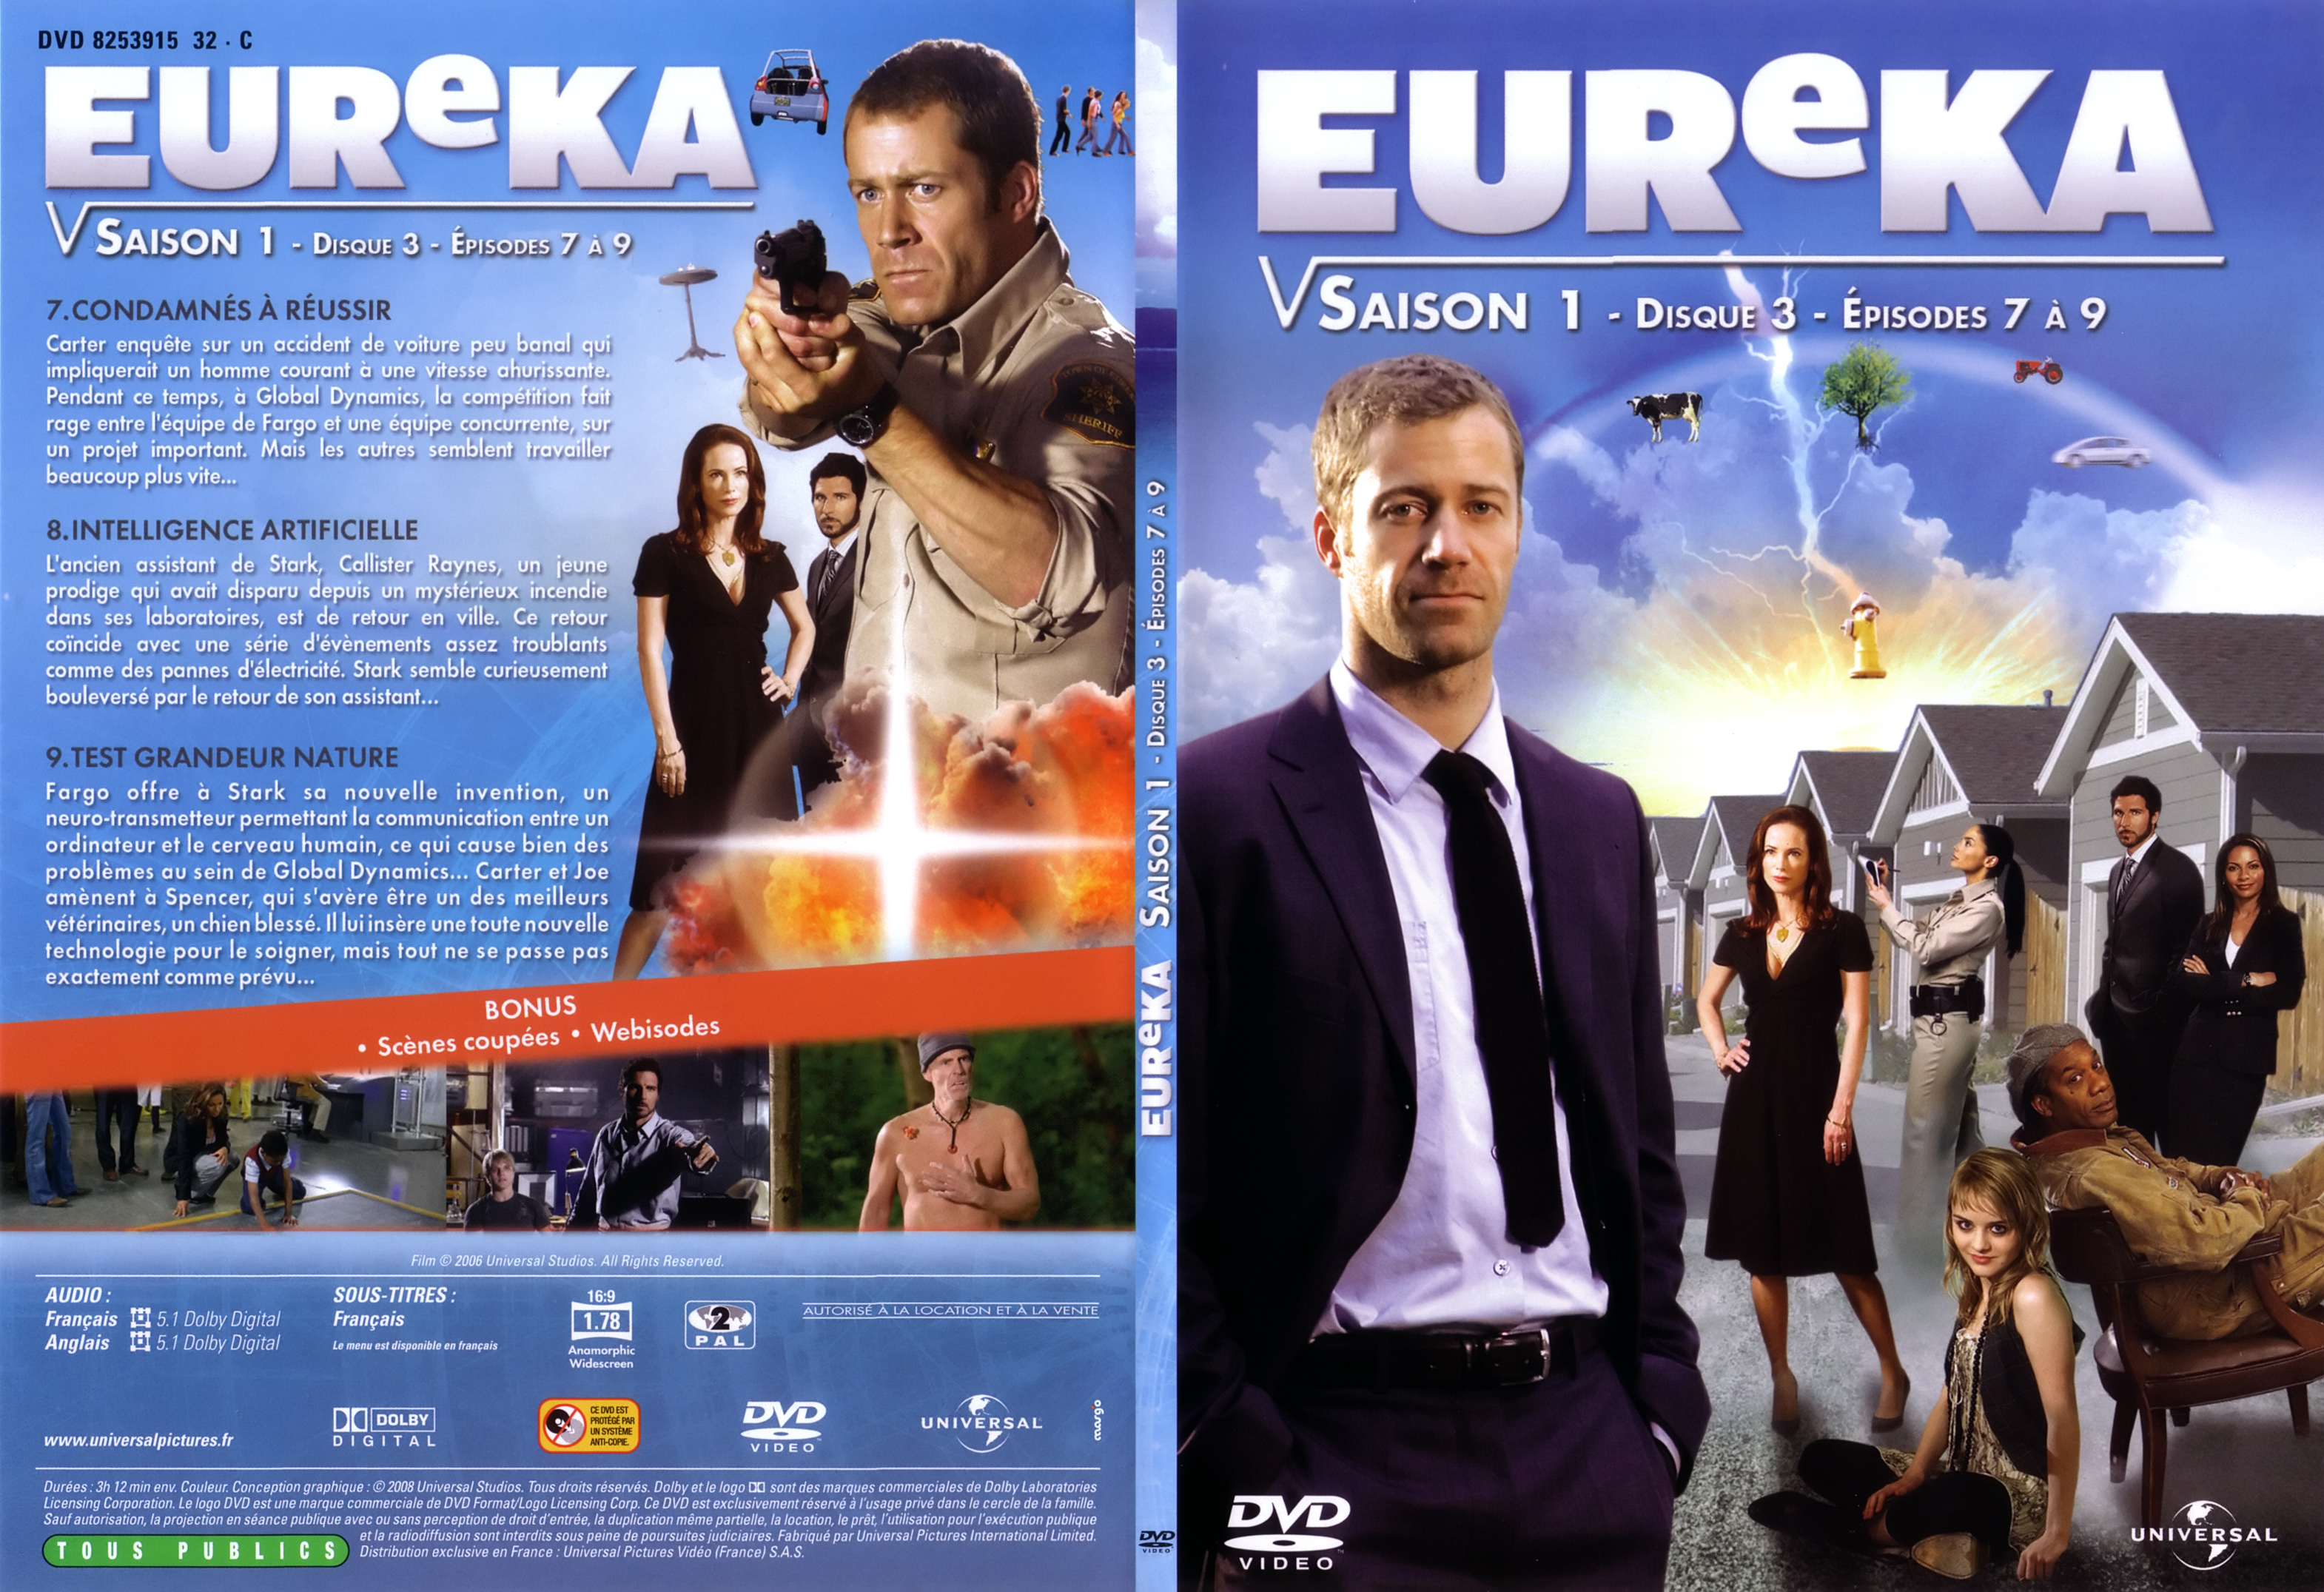 Jaquette DVD Eureka saison 1 DVD 3